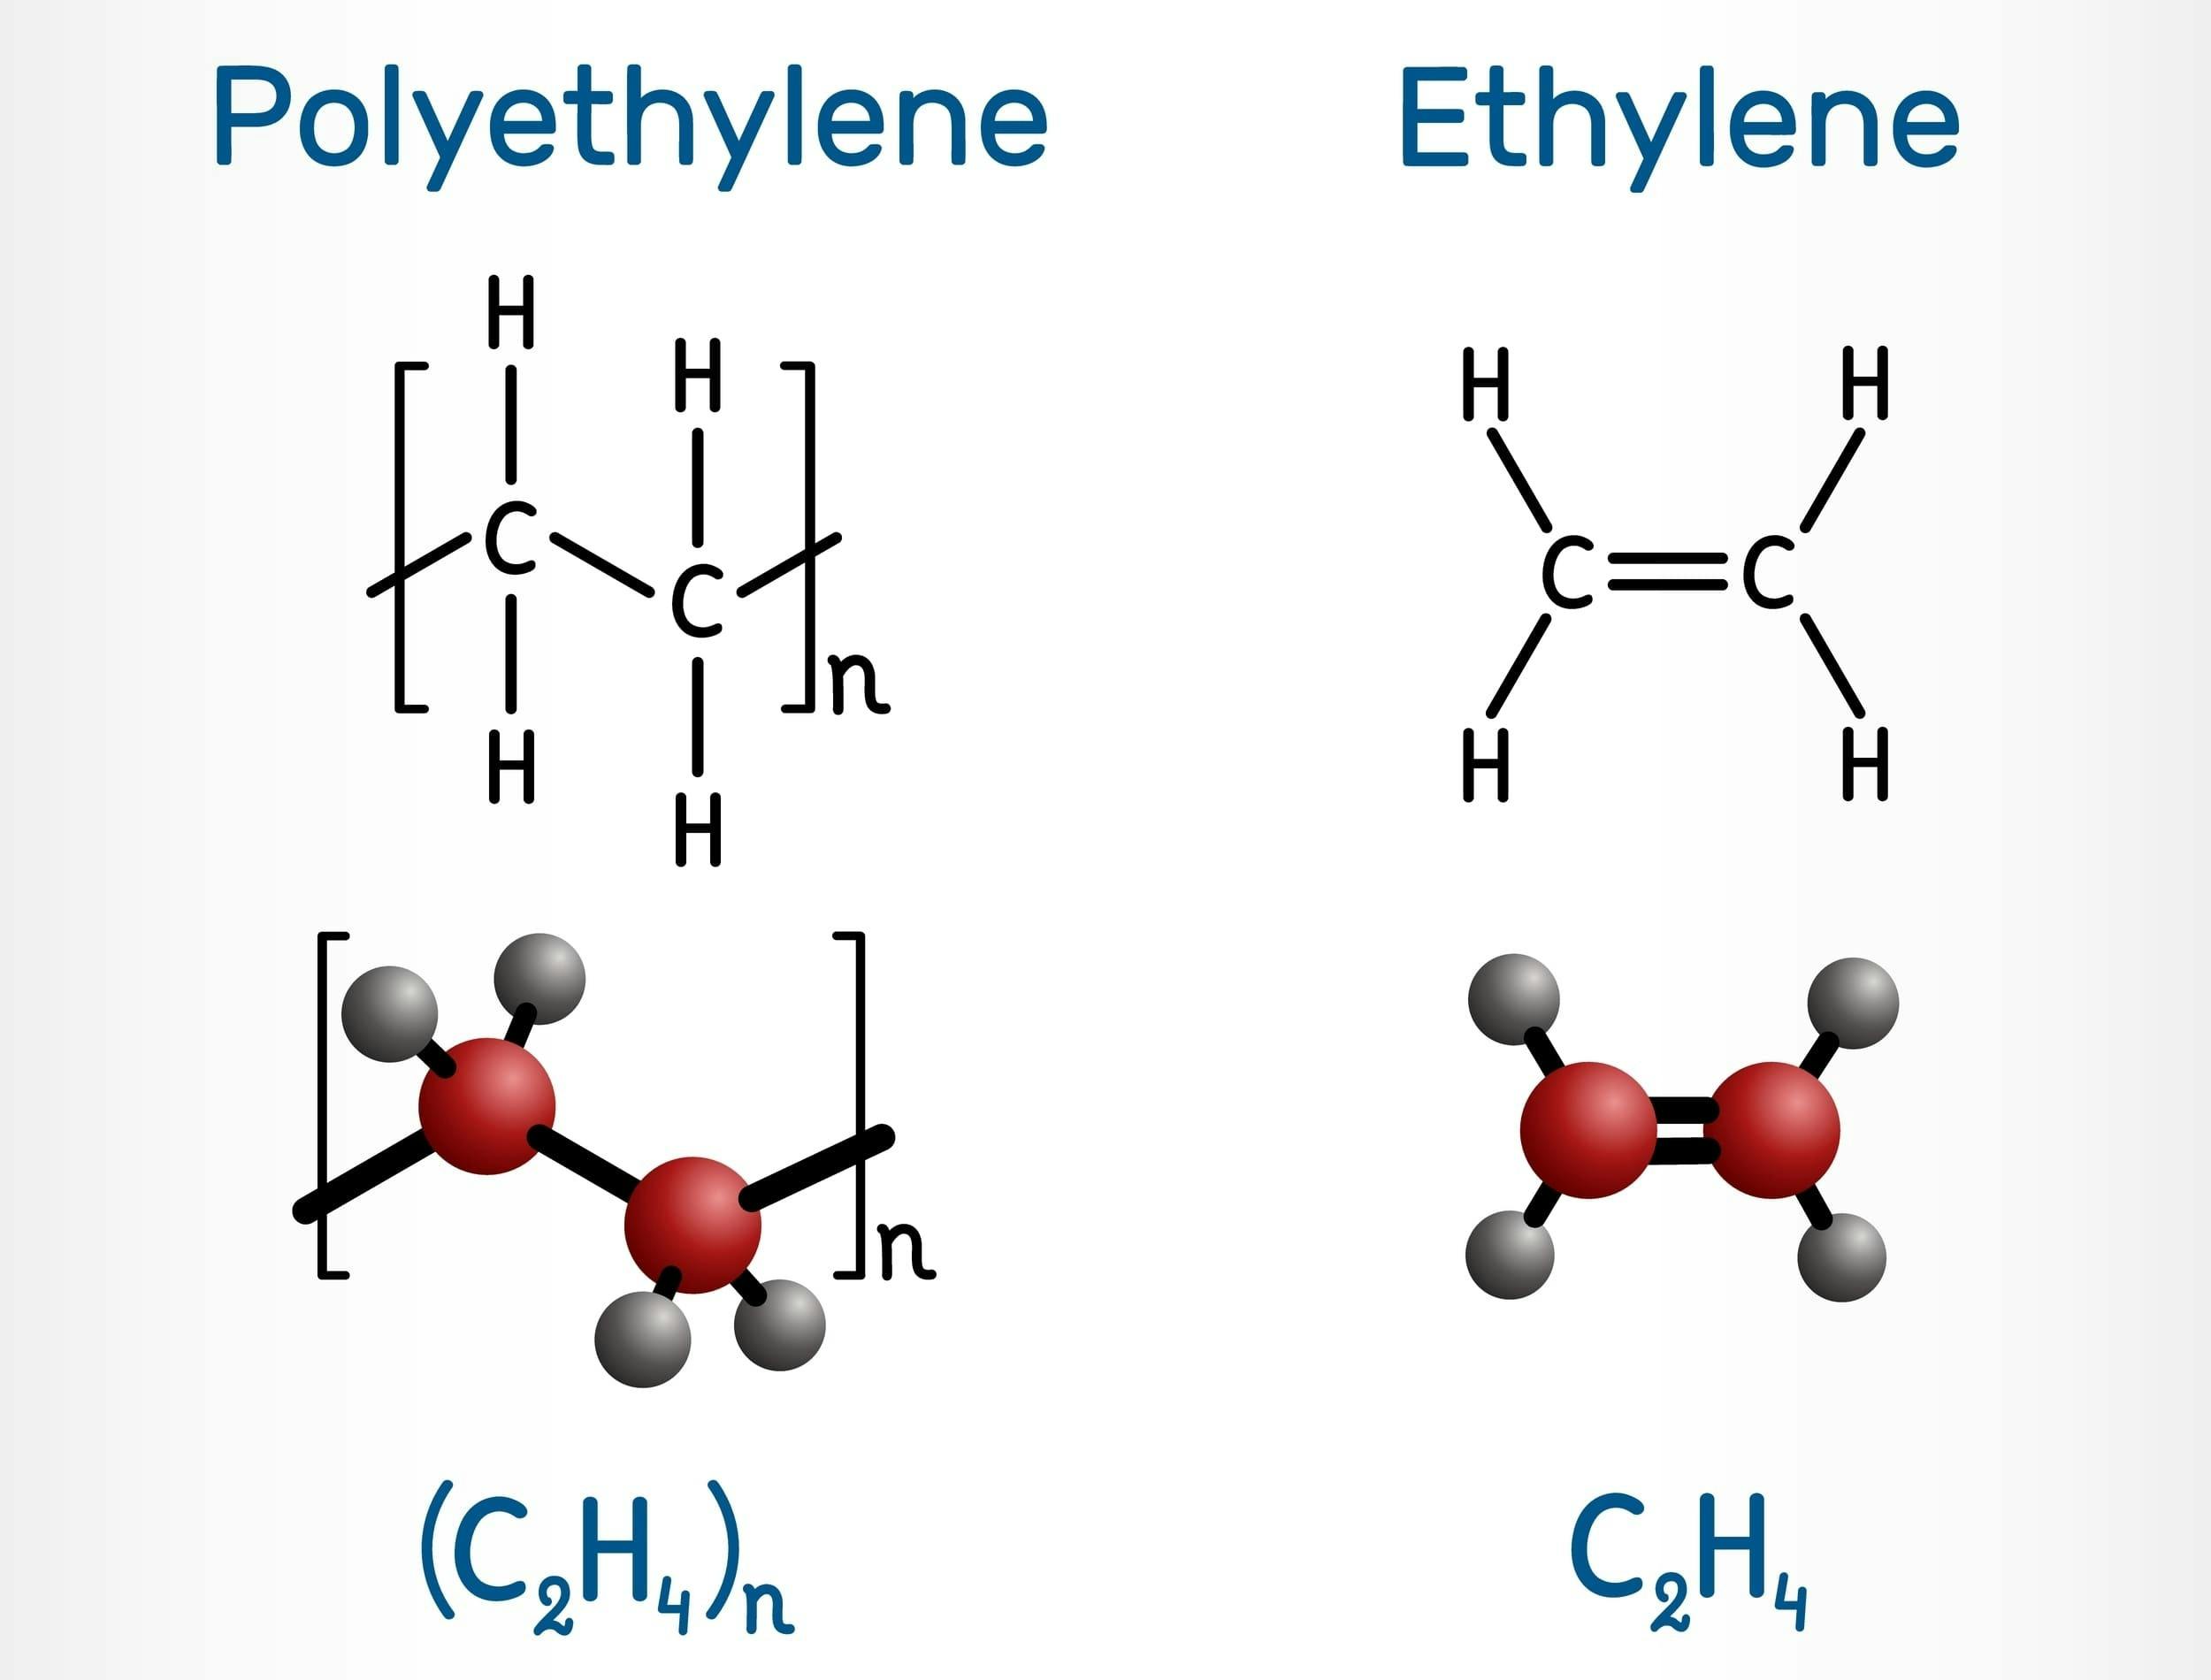 low density polyethylene structural formula